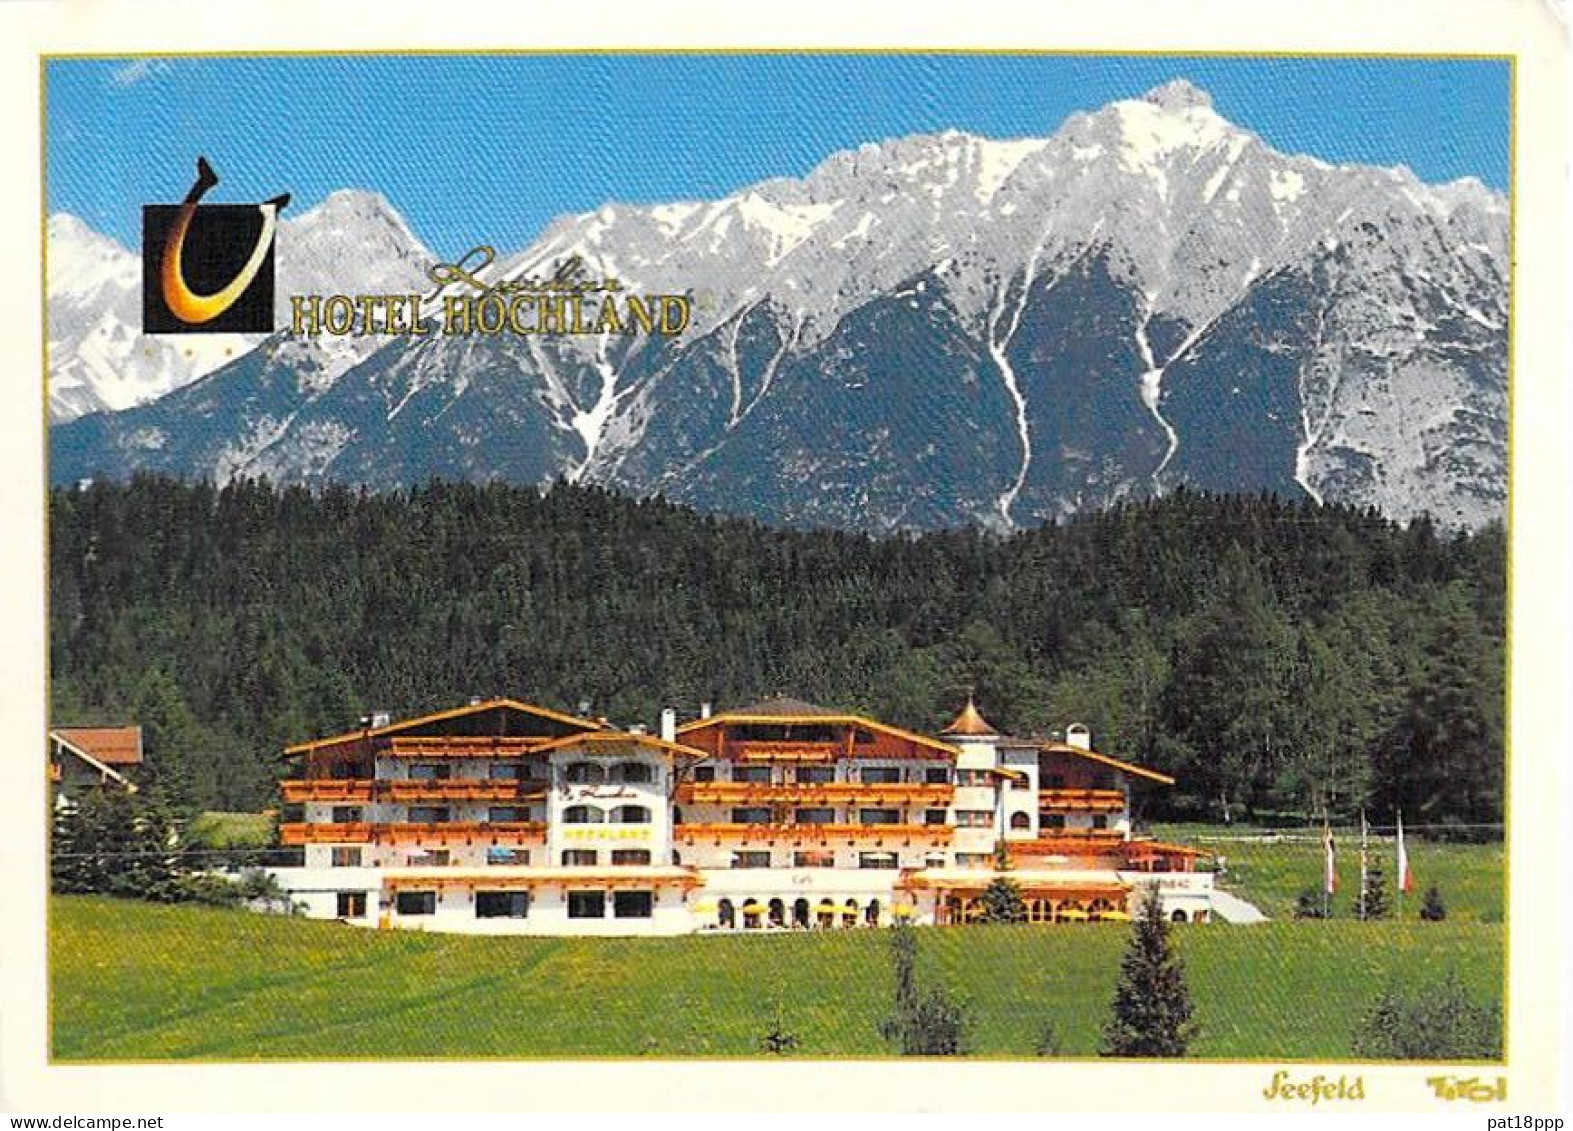 ÖSTERREICH Autriche - Lot de 45 CPSM GF HOTEL RESTAURANT : TIROL TYROL (0.11 € / carte) Austria Oostenrijk